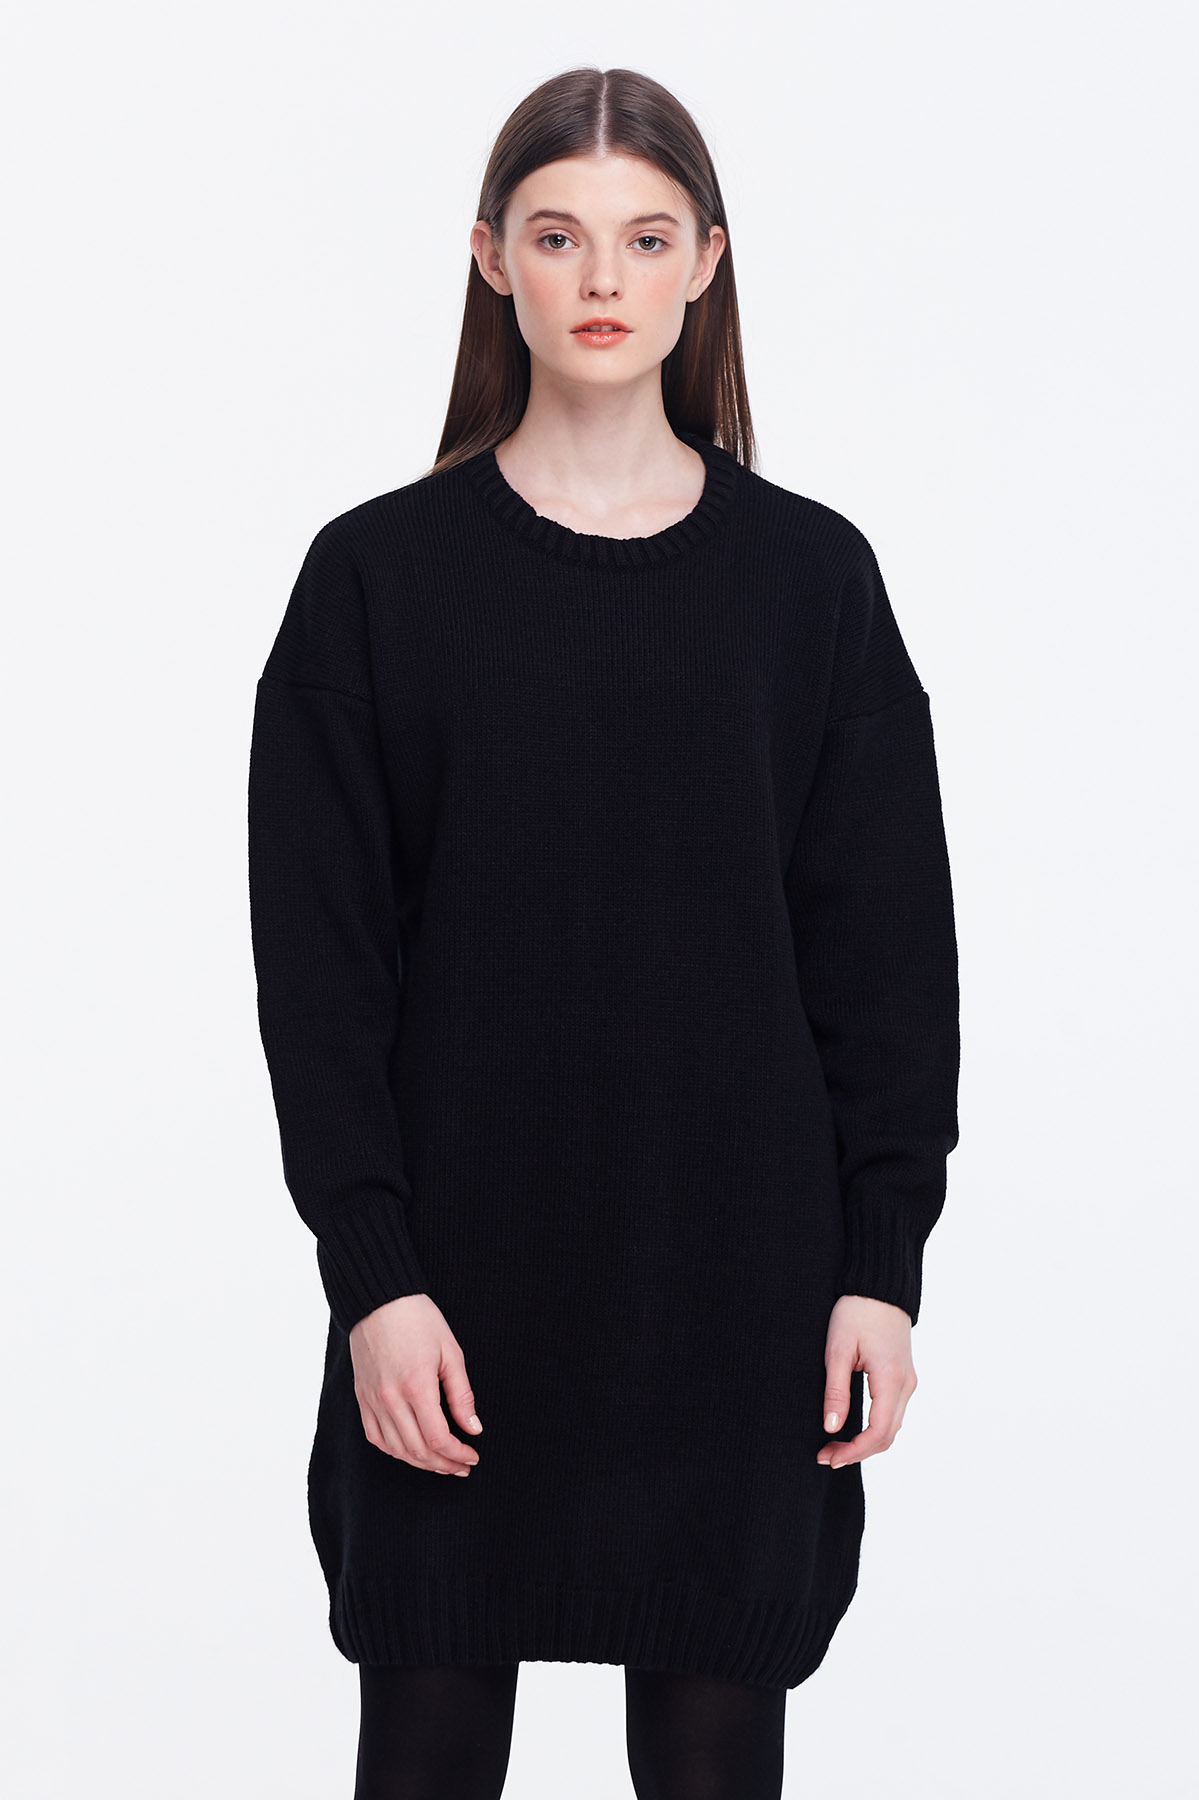 Loose-fitting black knit dress , photo 5